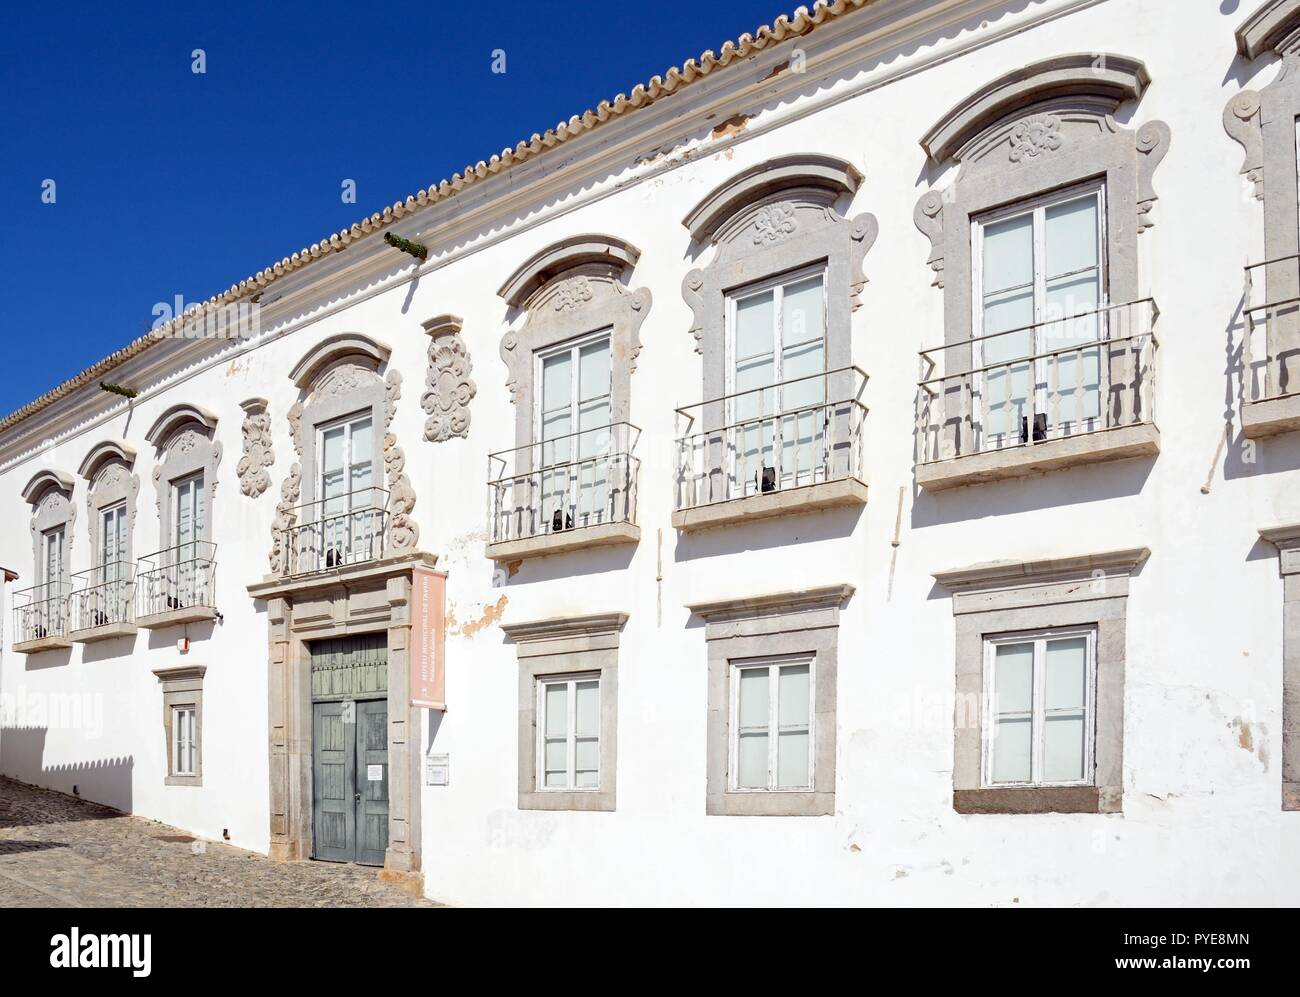 View of the Palacio de Galeria museum building along Calcada da Galeria in the old town, Tavira, Algarve, Portugal, Europe. Stock Photo